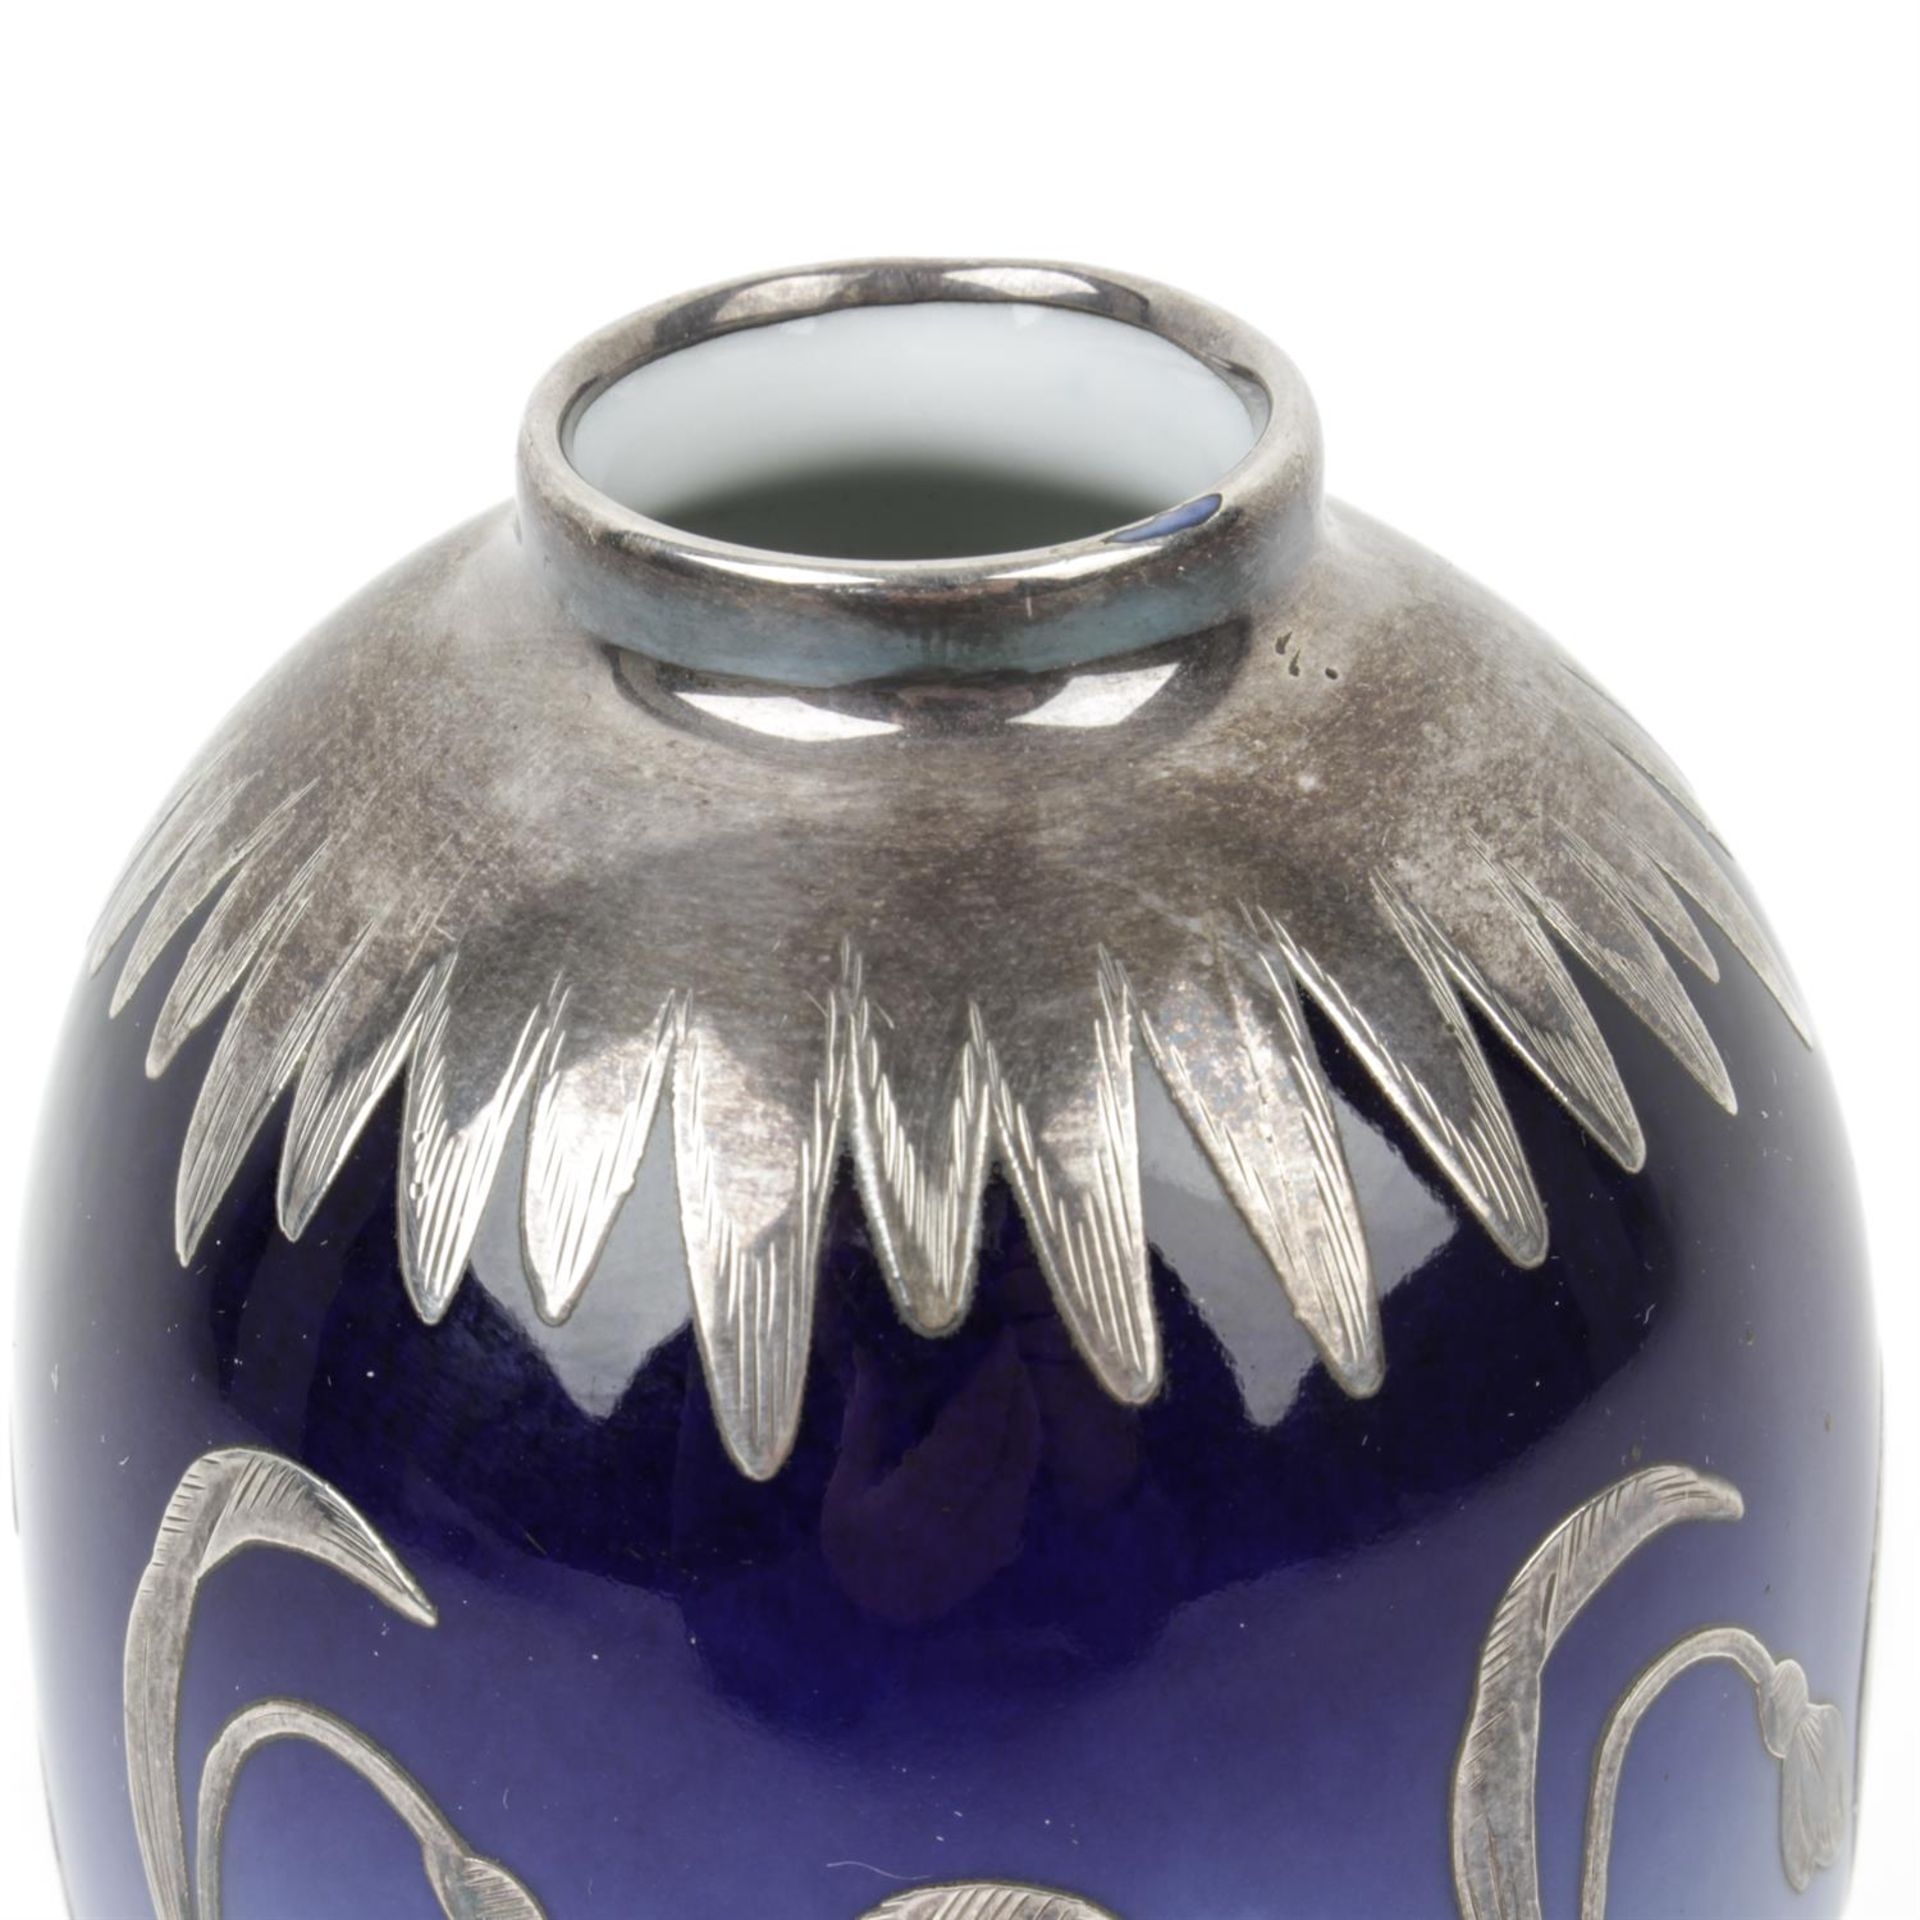 Rosenthal Art Nouveau overlay vase - Image 3 of 4